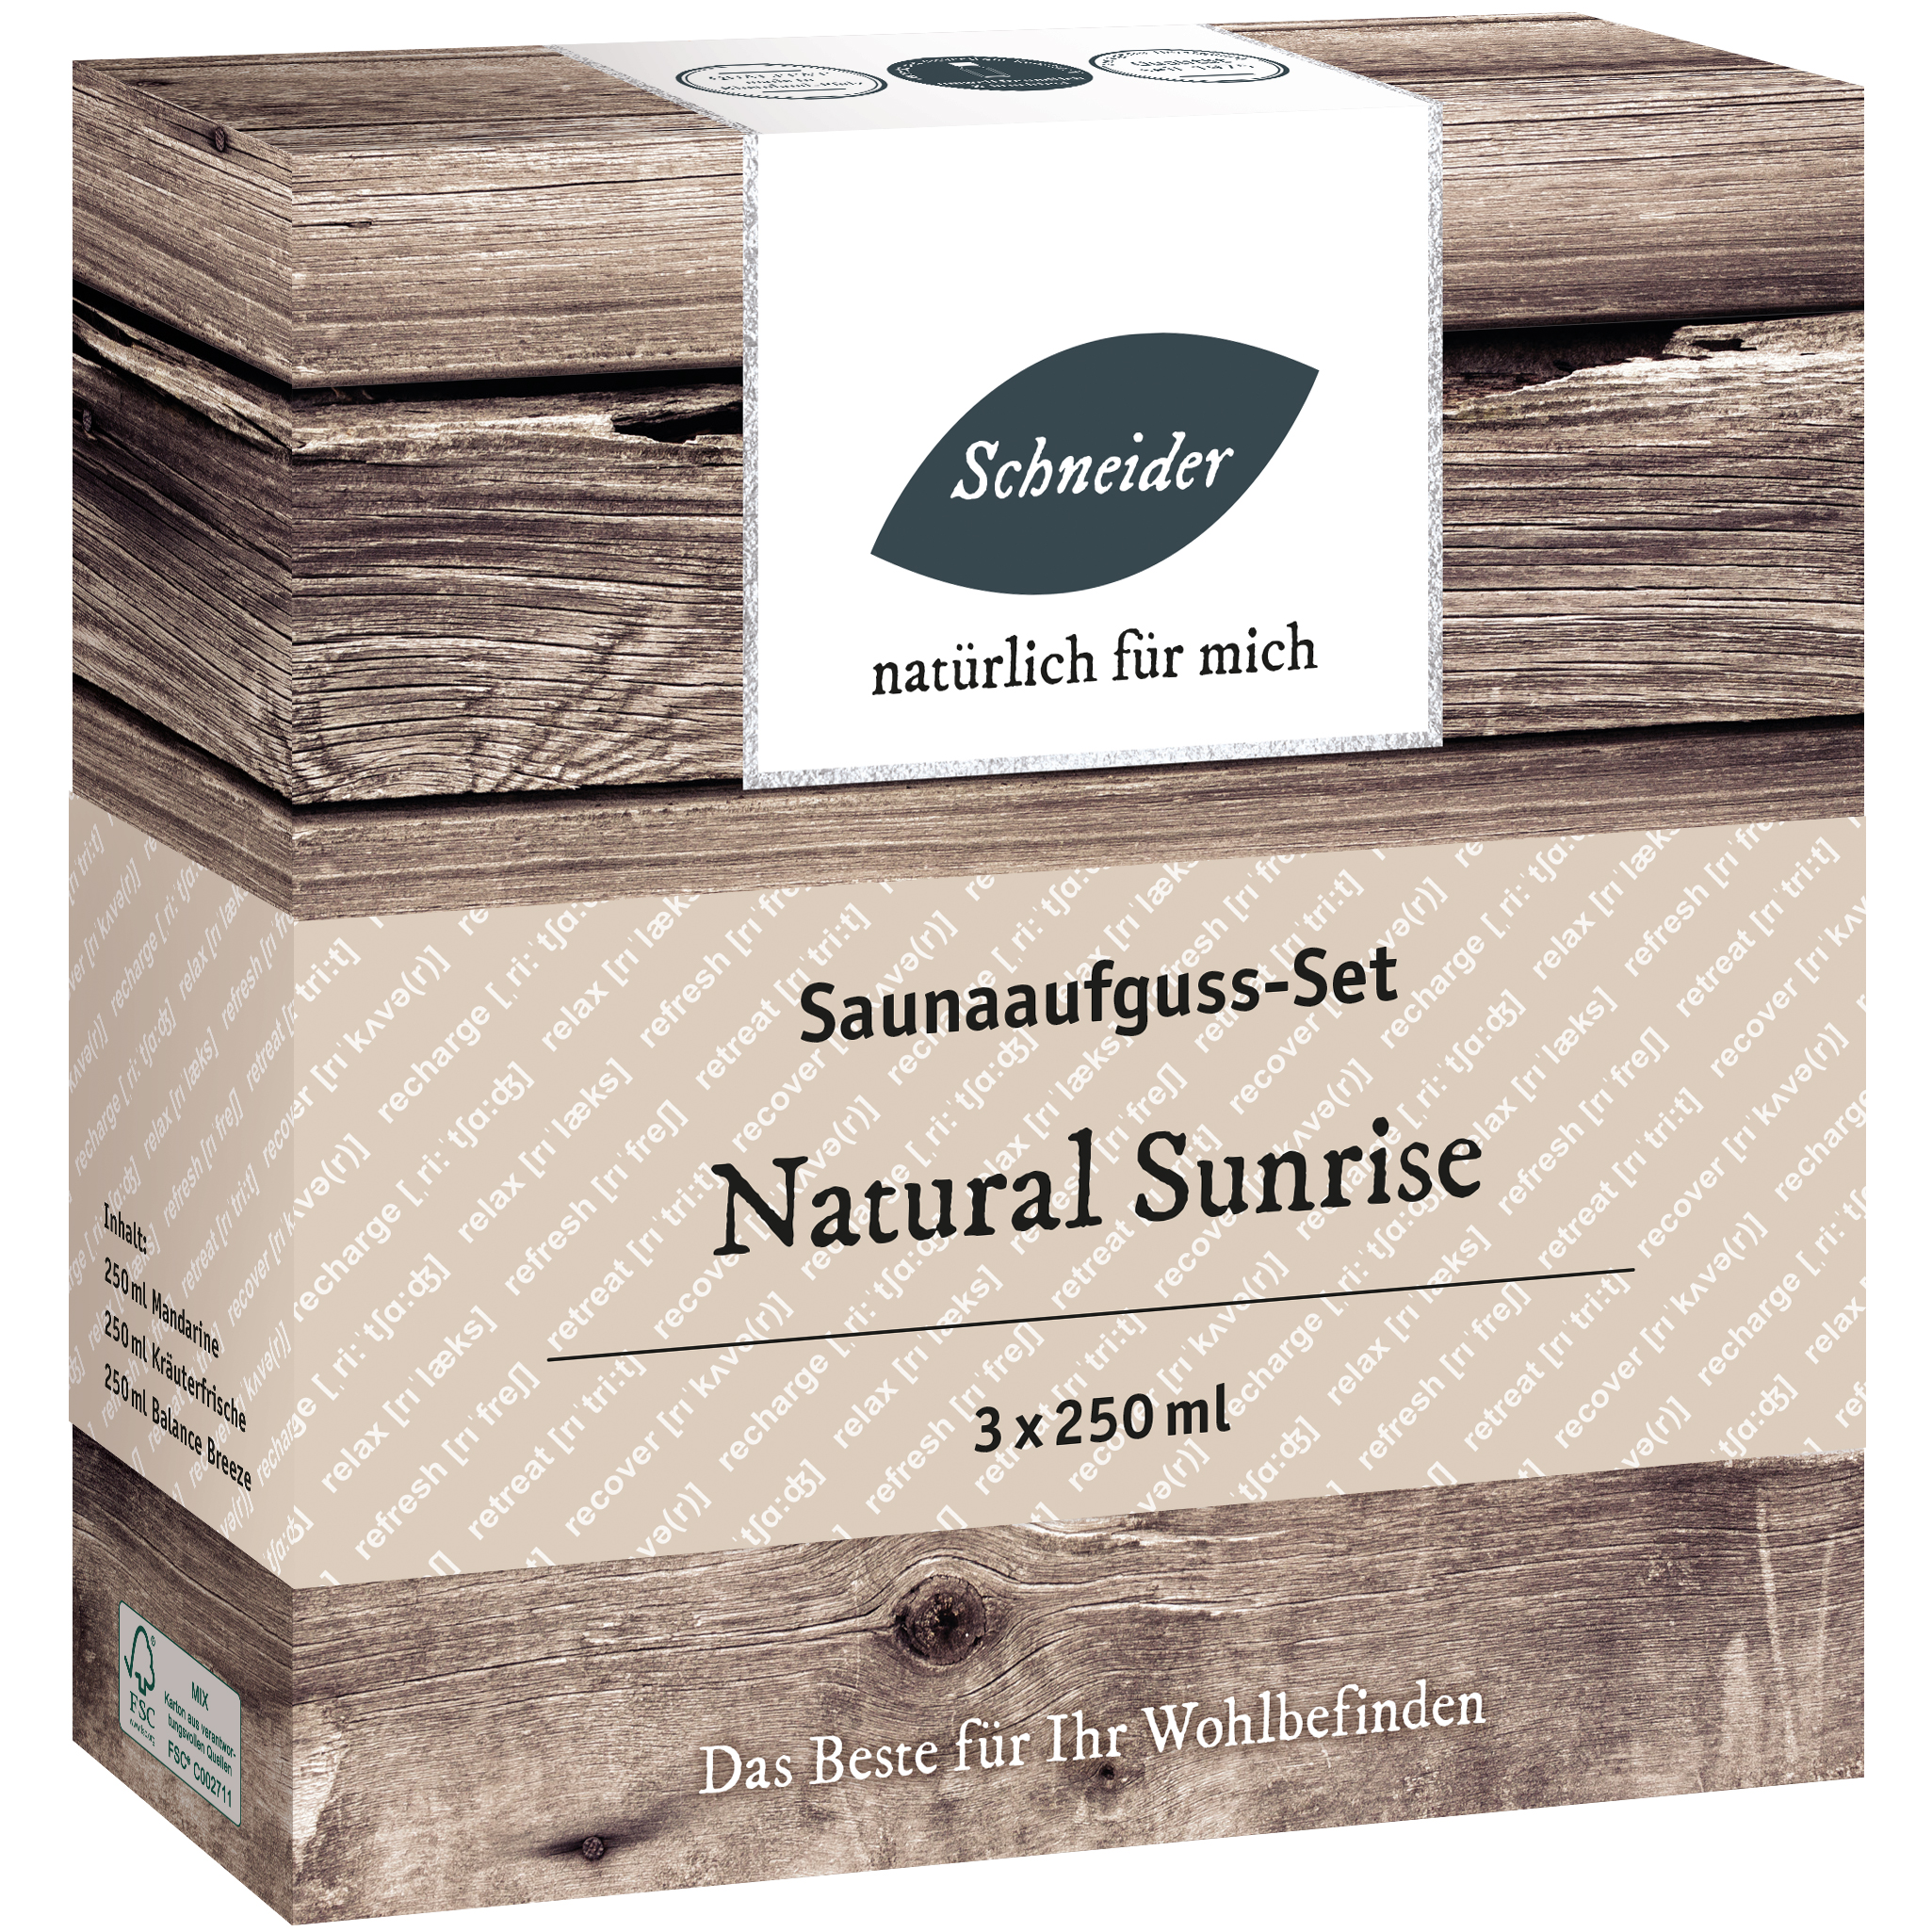 Saunaaufguss-Set - Natural Sunrise